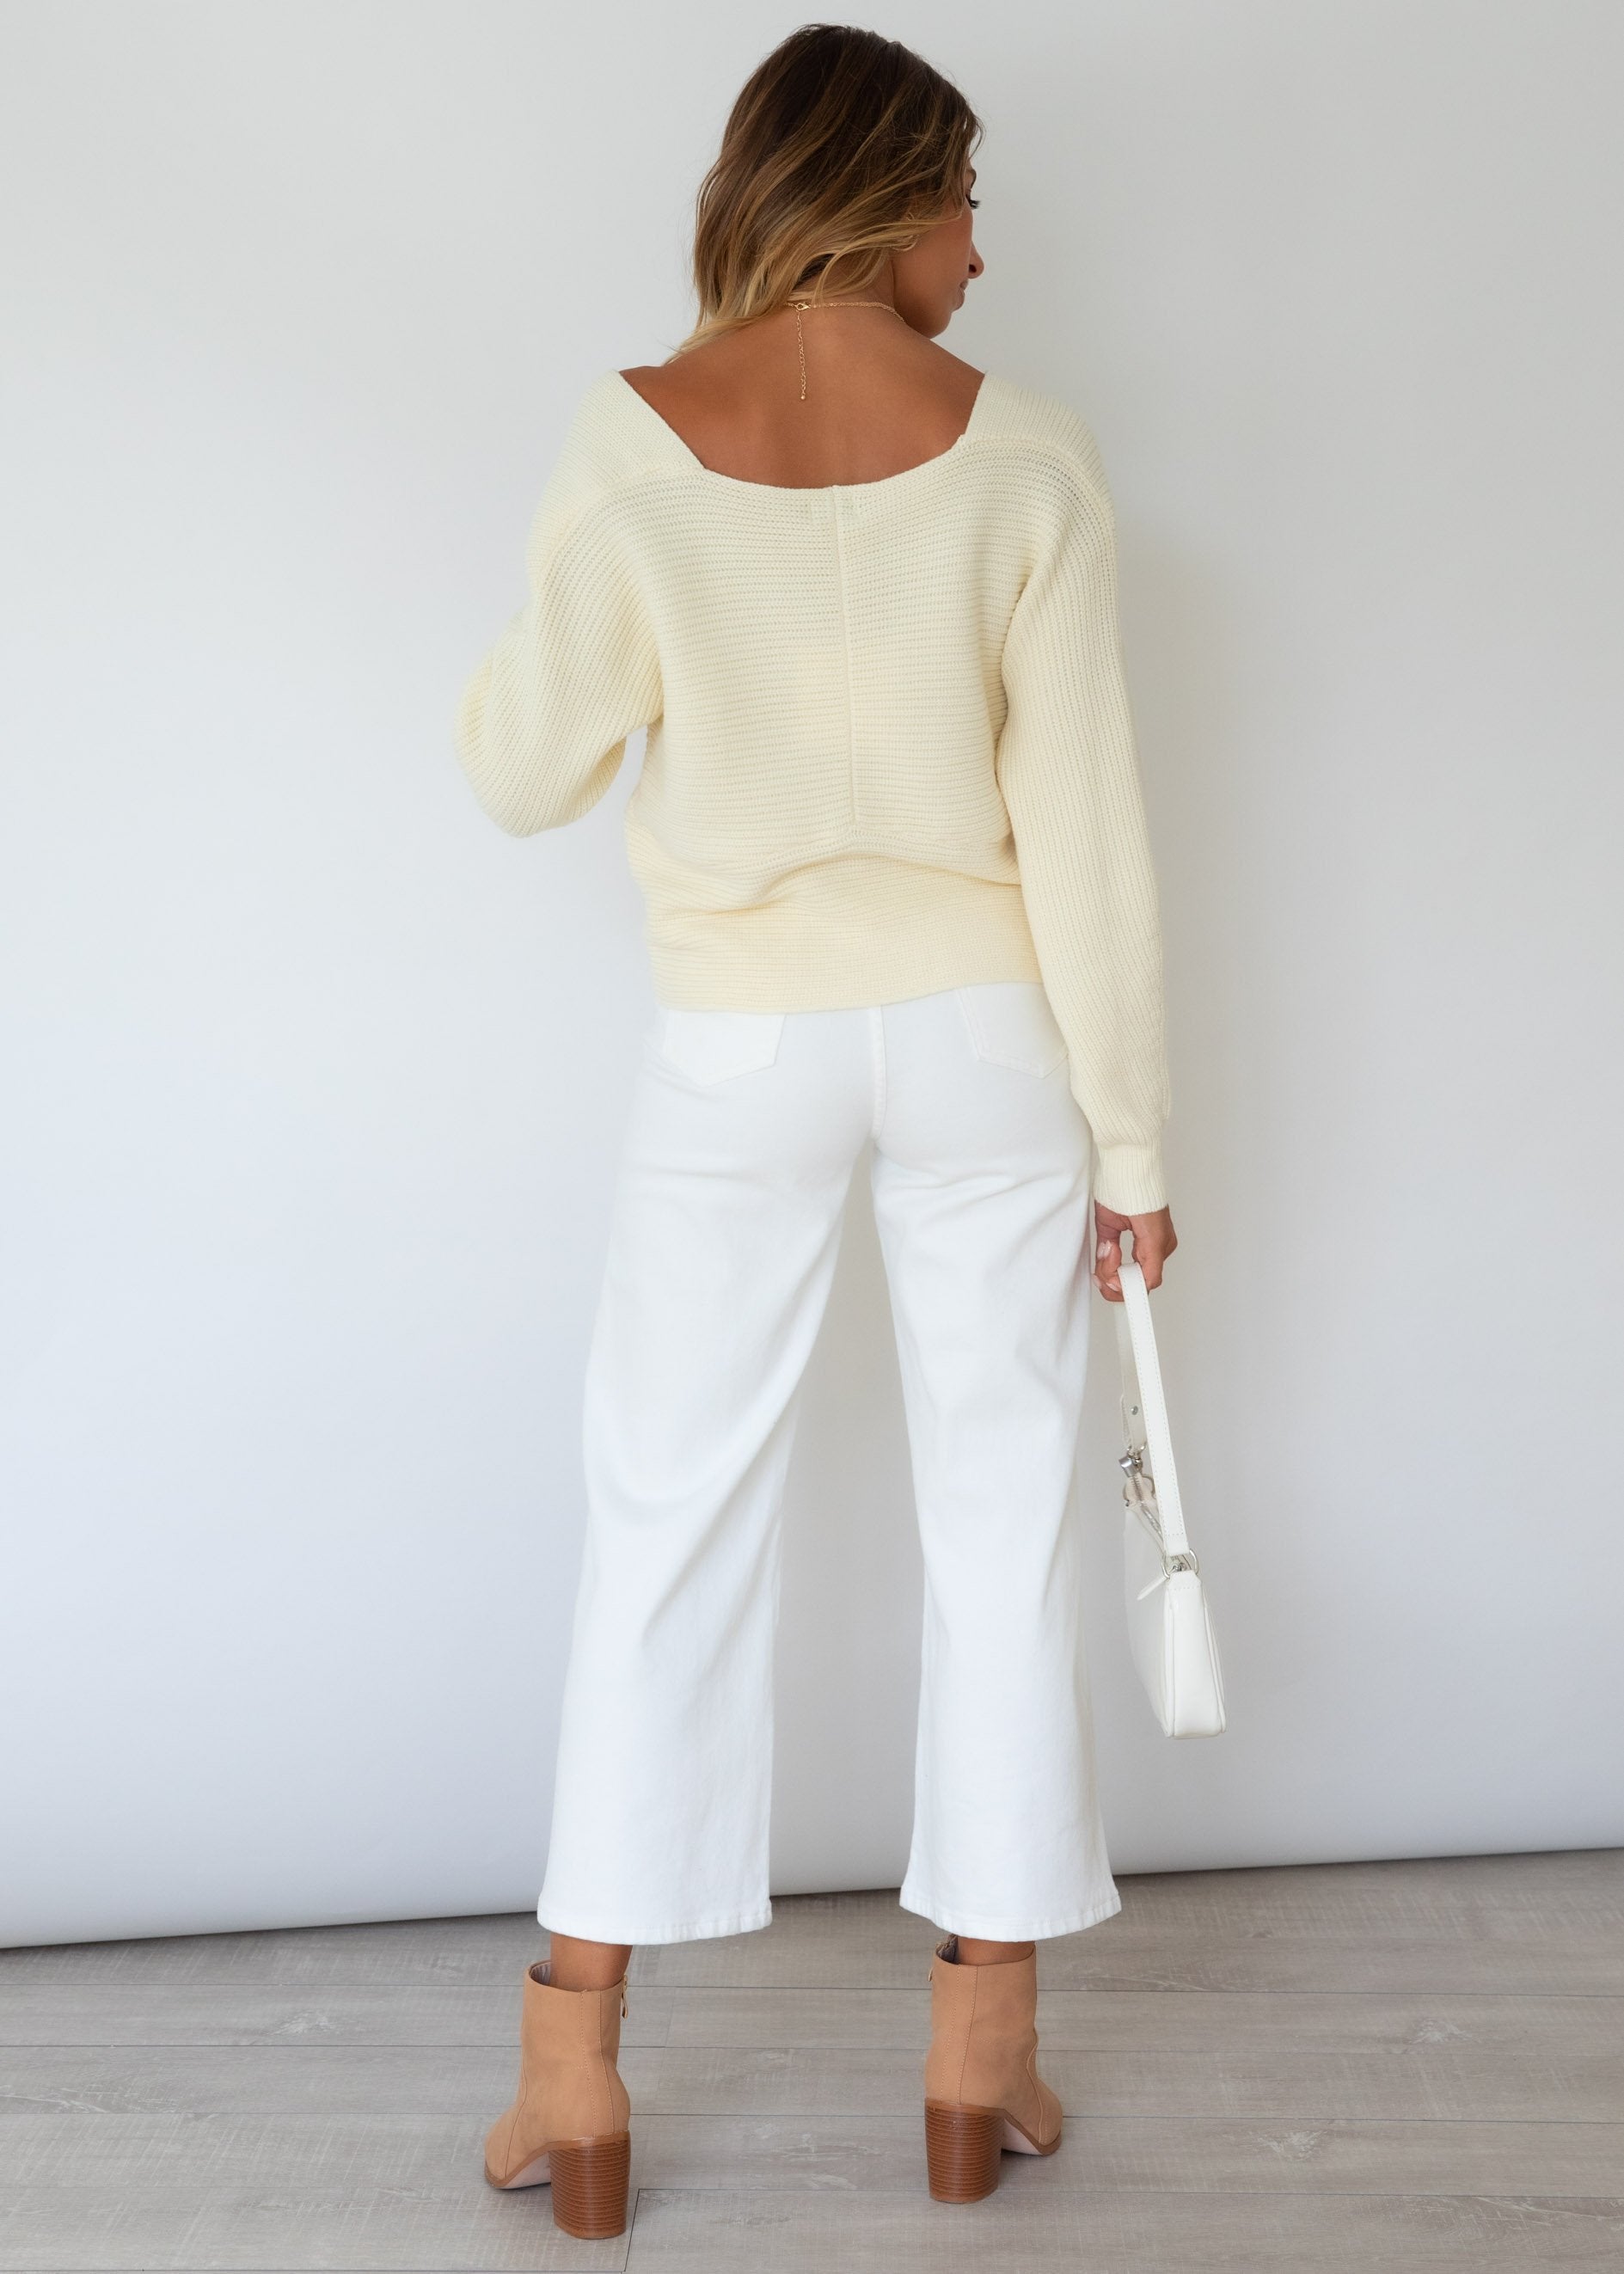 Etana Cross Over Sweater - Cream